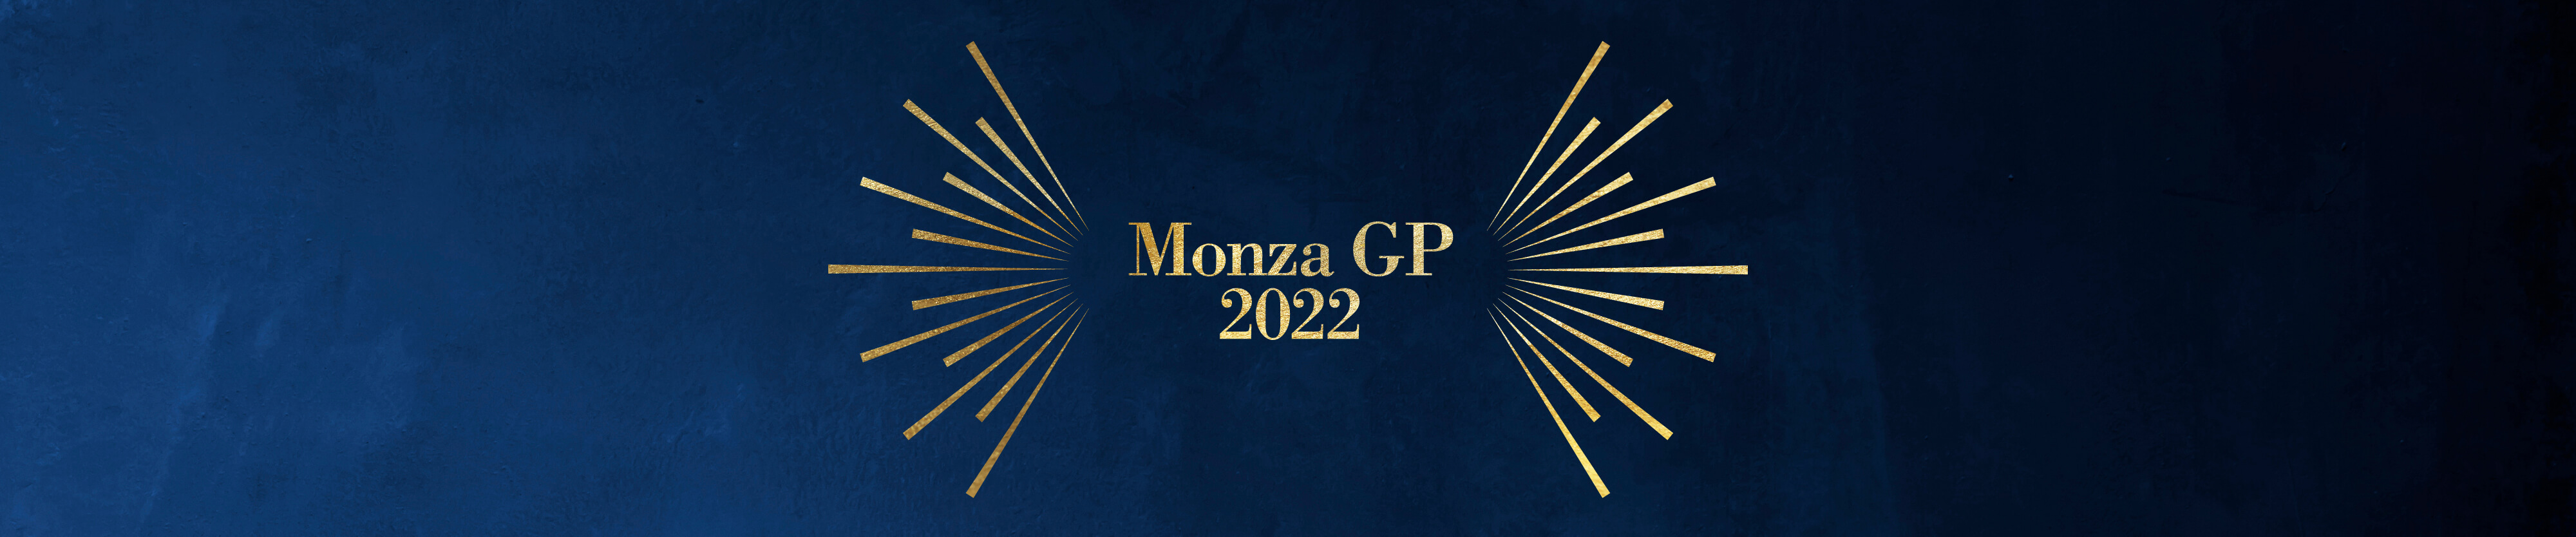 Monza GP 2022 Banner